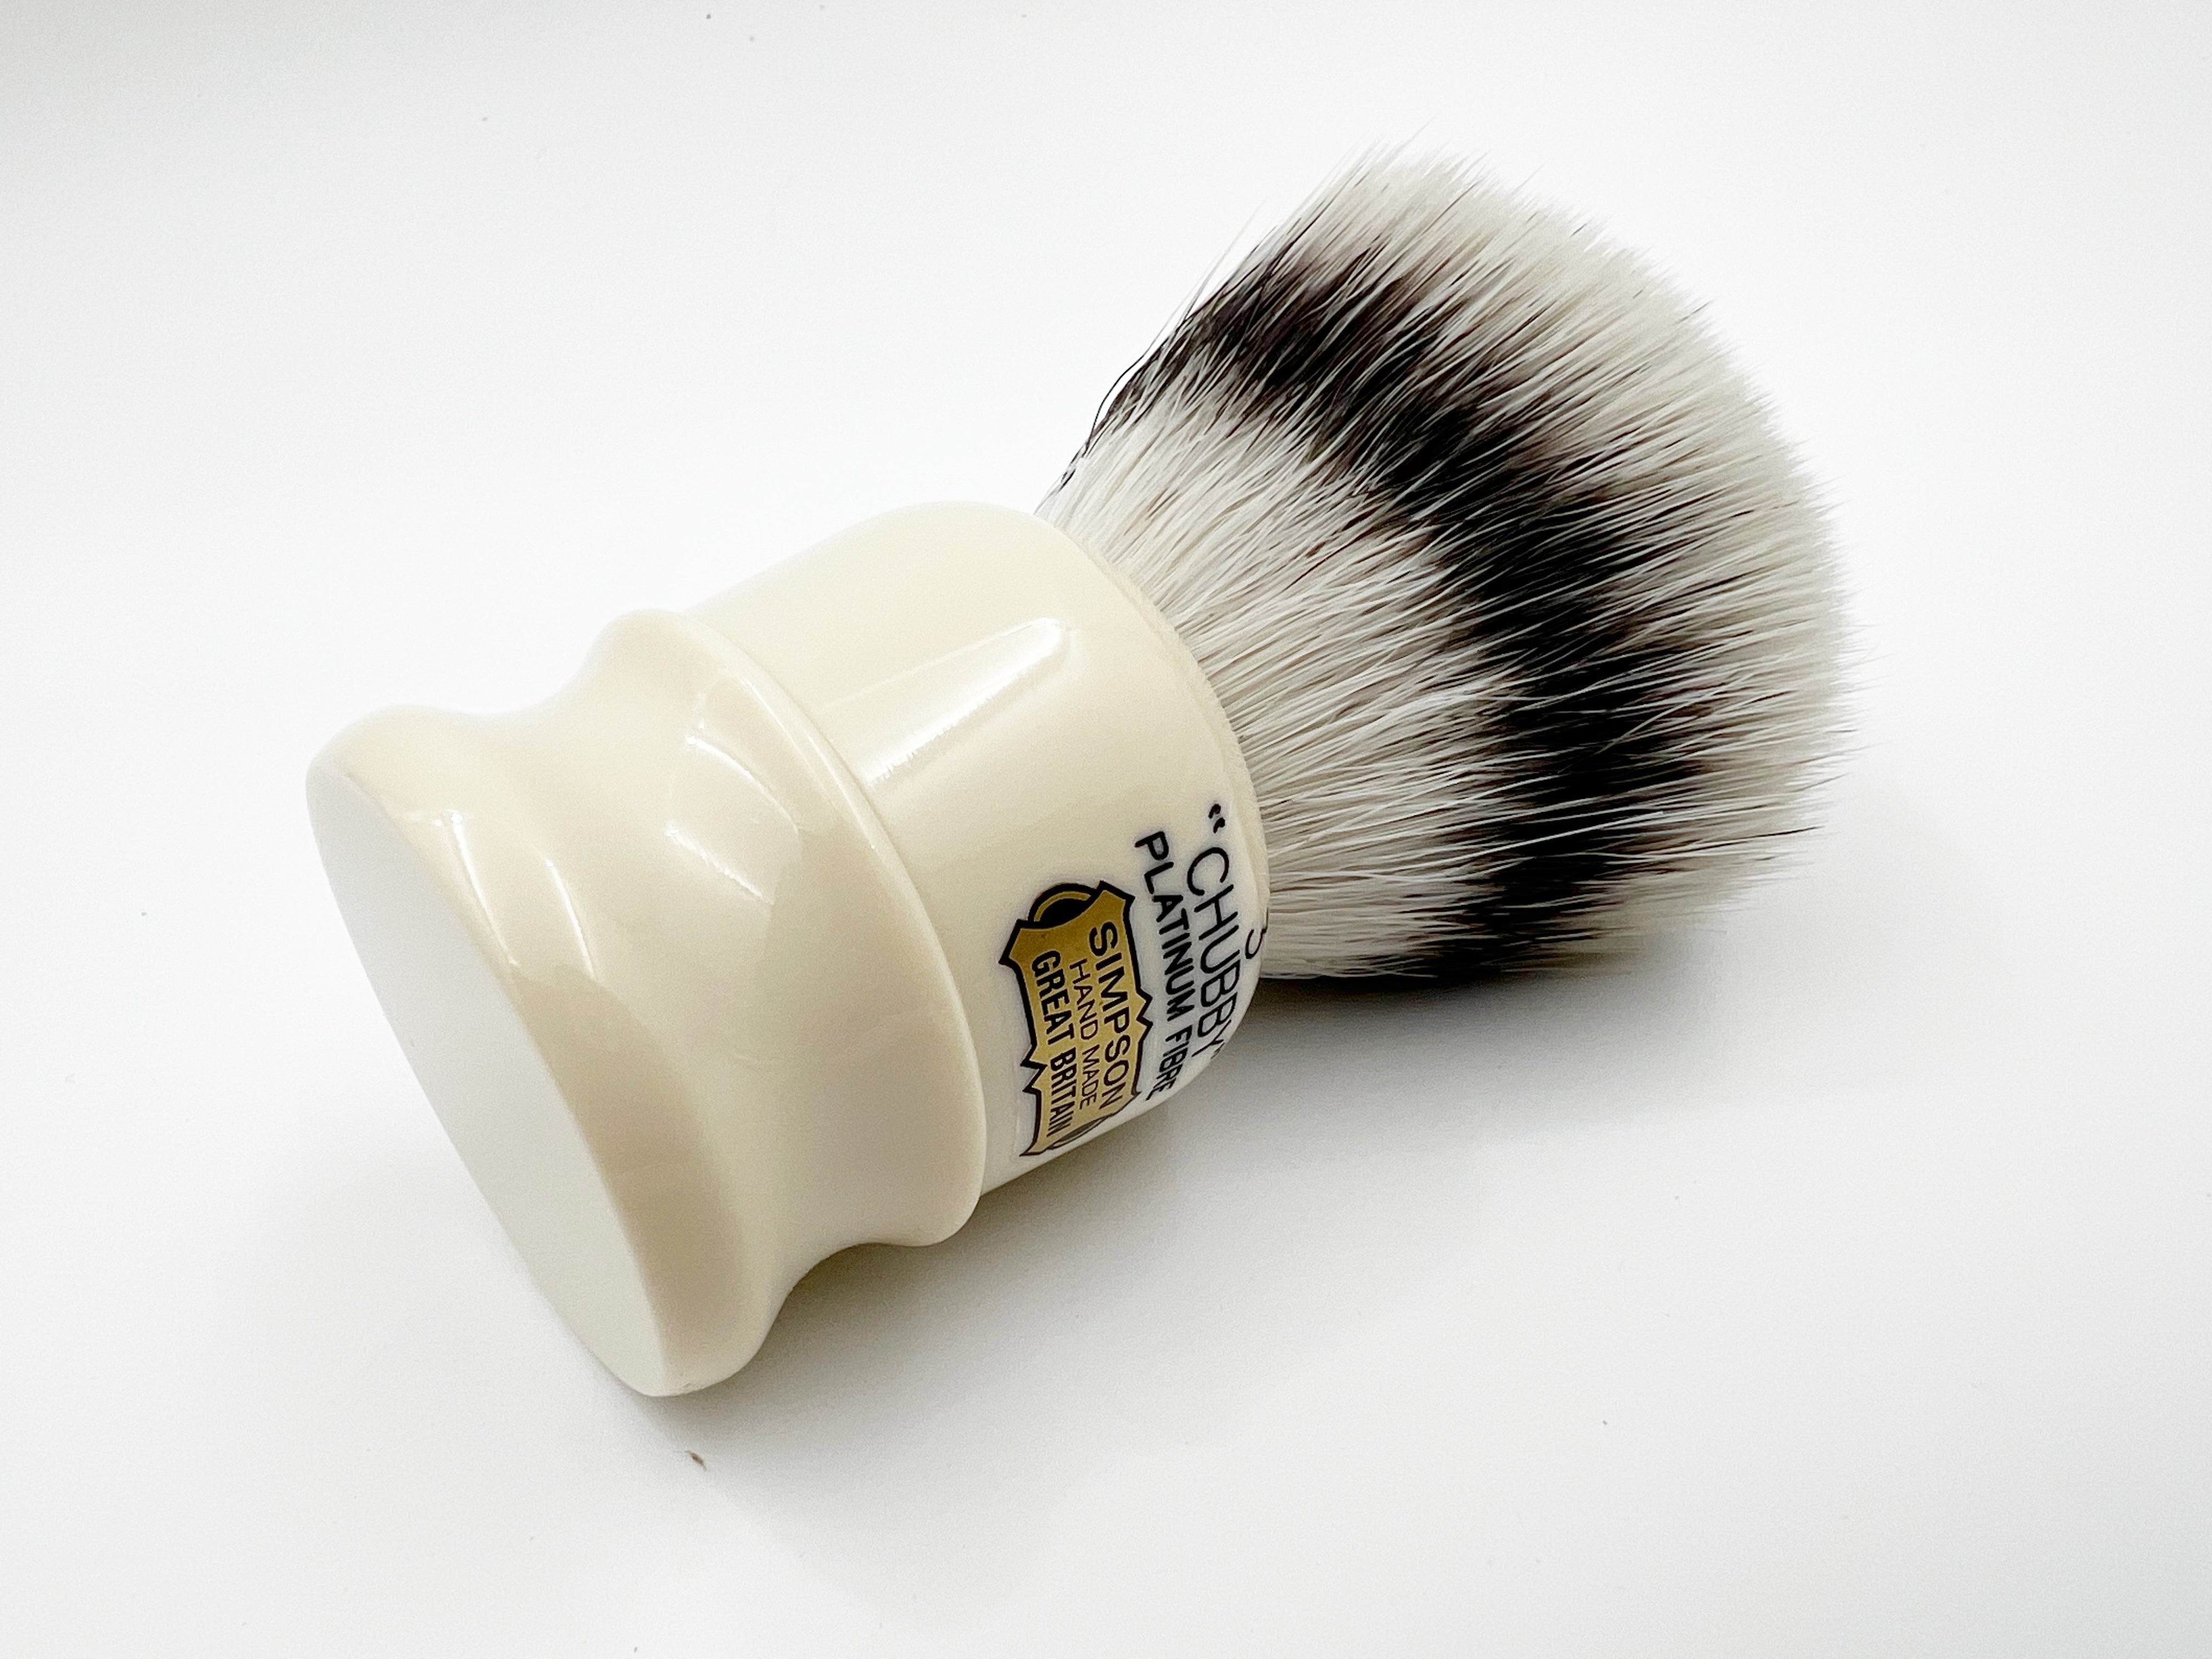 Simpson Chubby CH3 Platinum Synthetic Bristle Shaving Brush